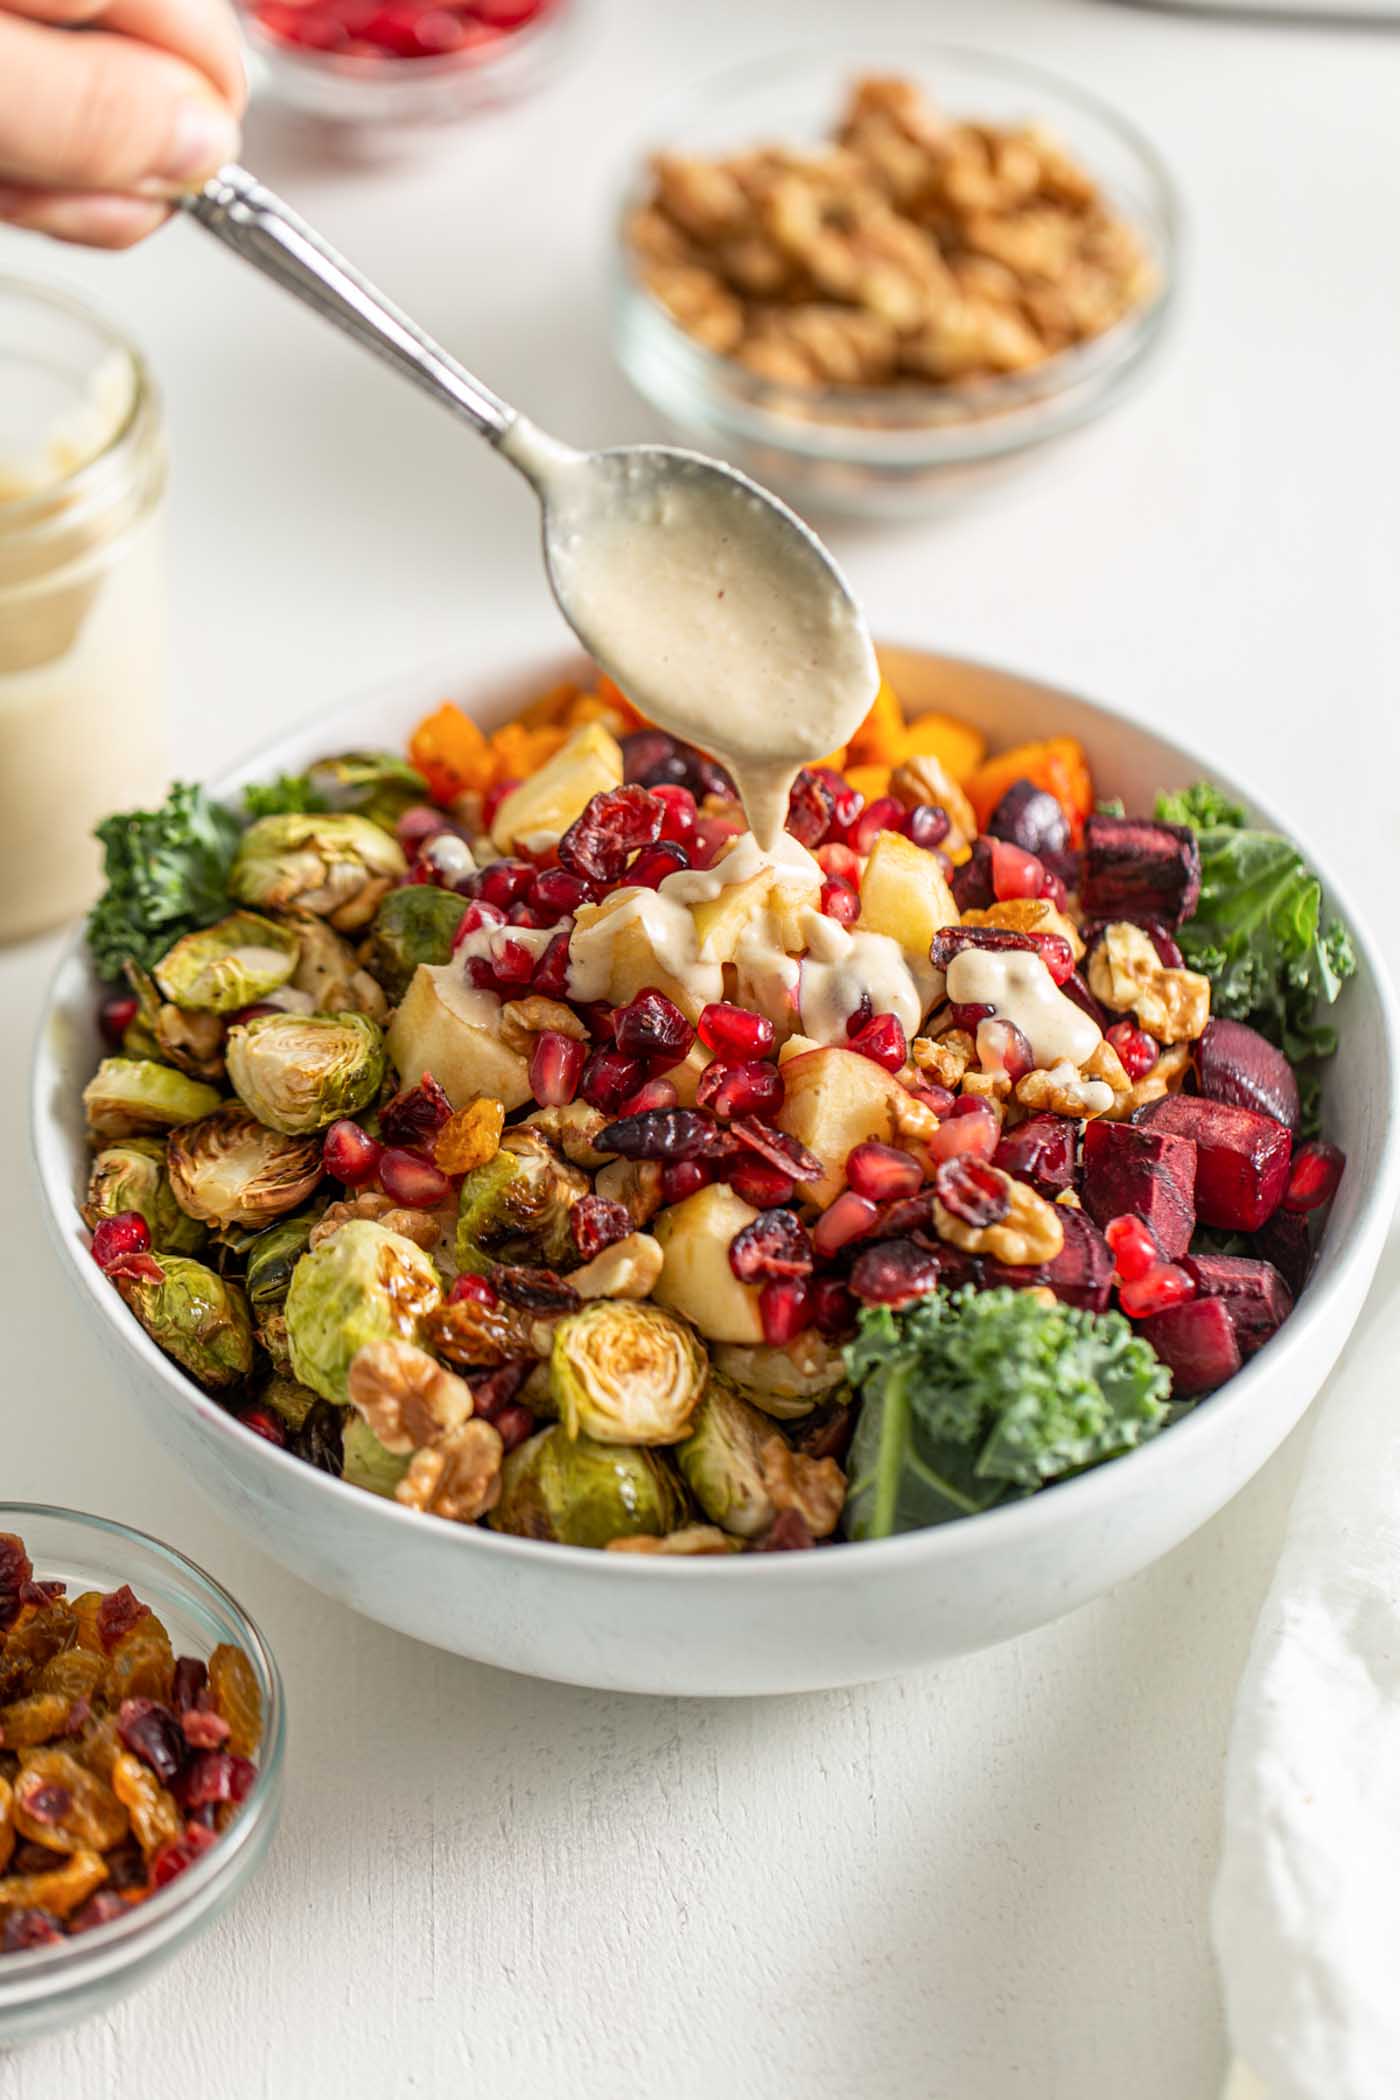 https://runningonrealfood.com/wp-content/uploads/2020/10/Vegan-Fall-Harvest-Salad-Maple-Tahini-Dressing-12.jpg